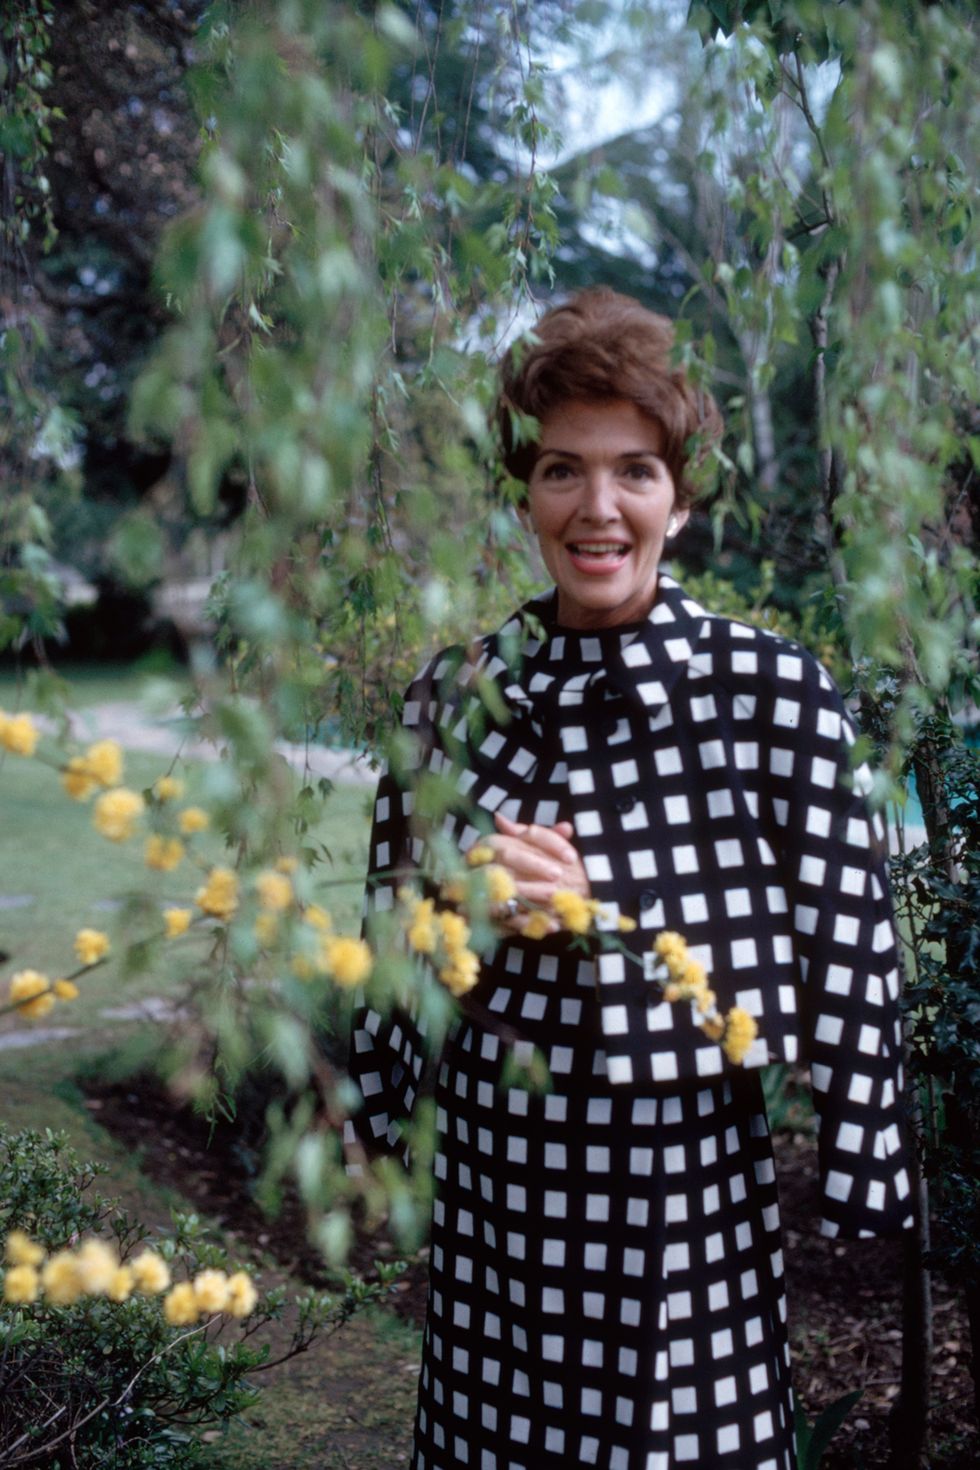 Nancy Reagan wearing a dress by James Galanos in 1967